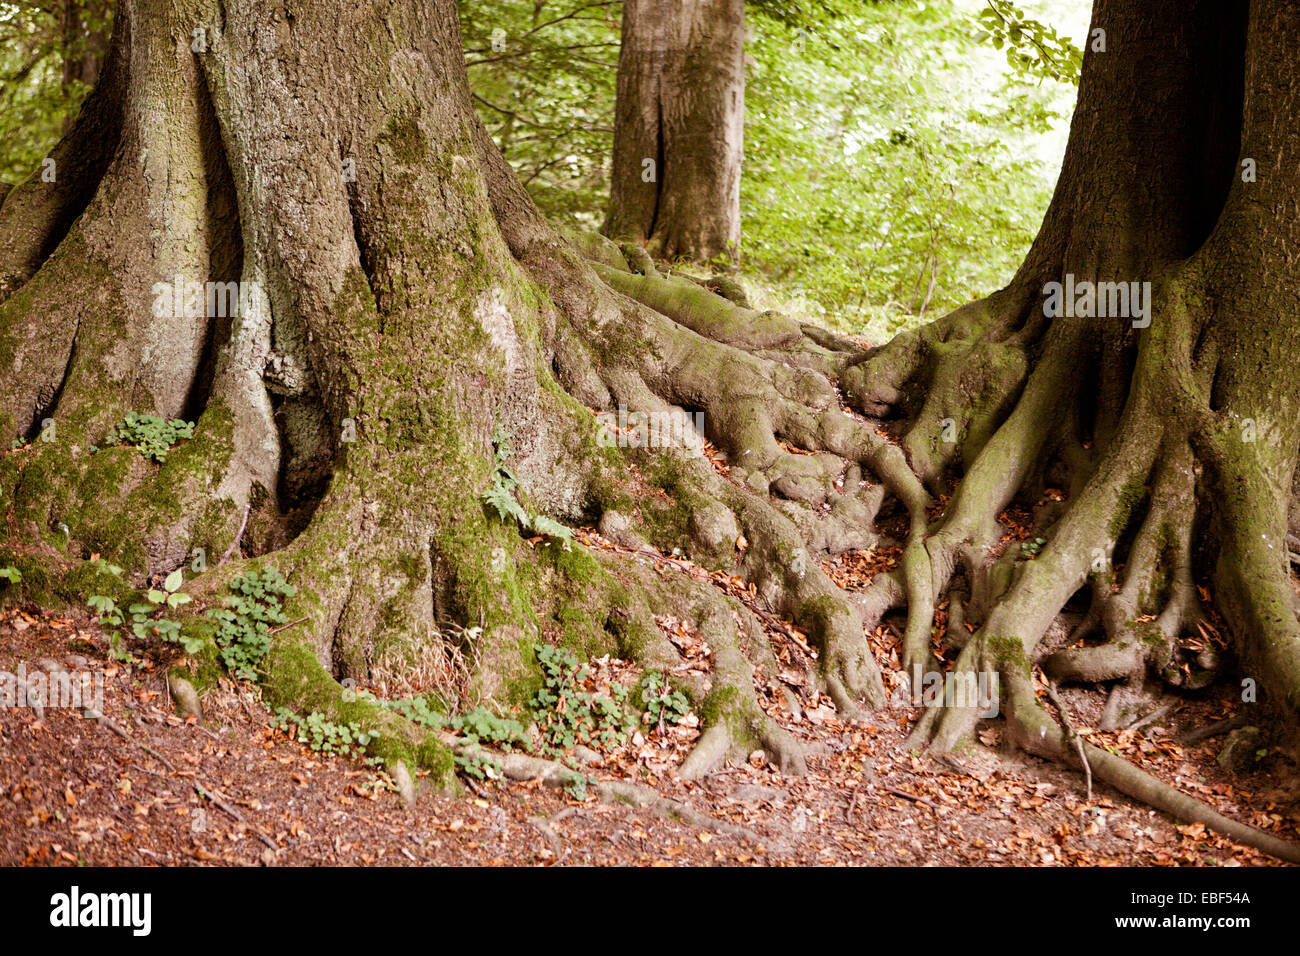 Tree roots, Beech (Fagus sp.), Nature reserve Felsenmeer, Hemer, Sauerland region, North Rhine-Westphalia, Germany, Europe, Baum Stock Photo